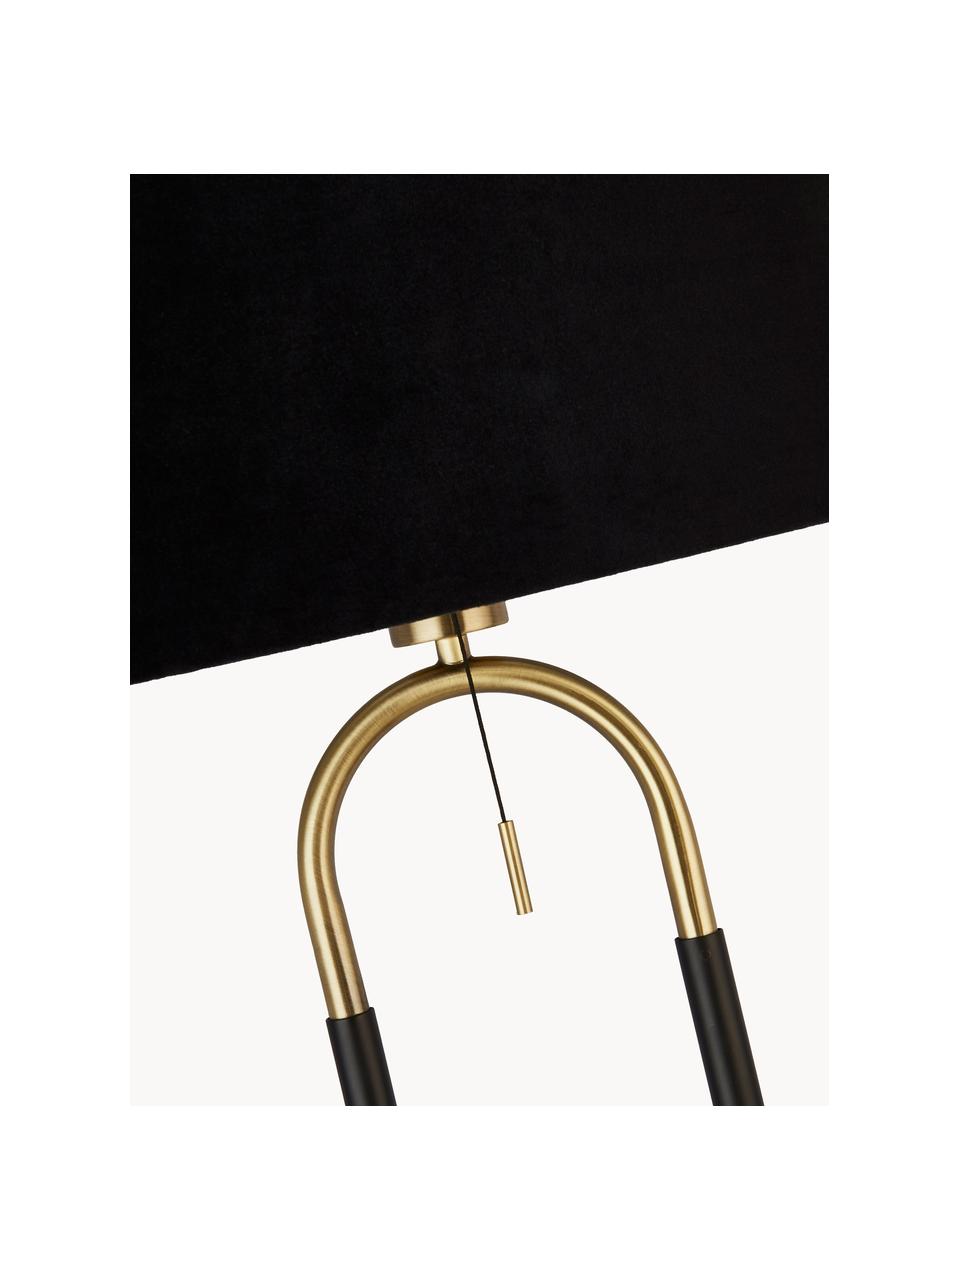 Vloerlamp Satina met fluwelen lampenkap, Lampenkap: fluweel, Lampvoet: staal, Zwart, goudkleurig, H 161 cm